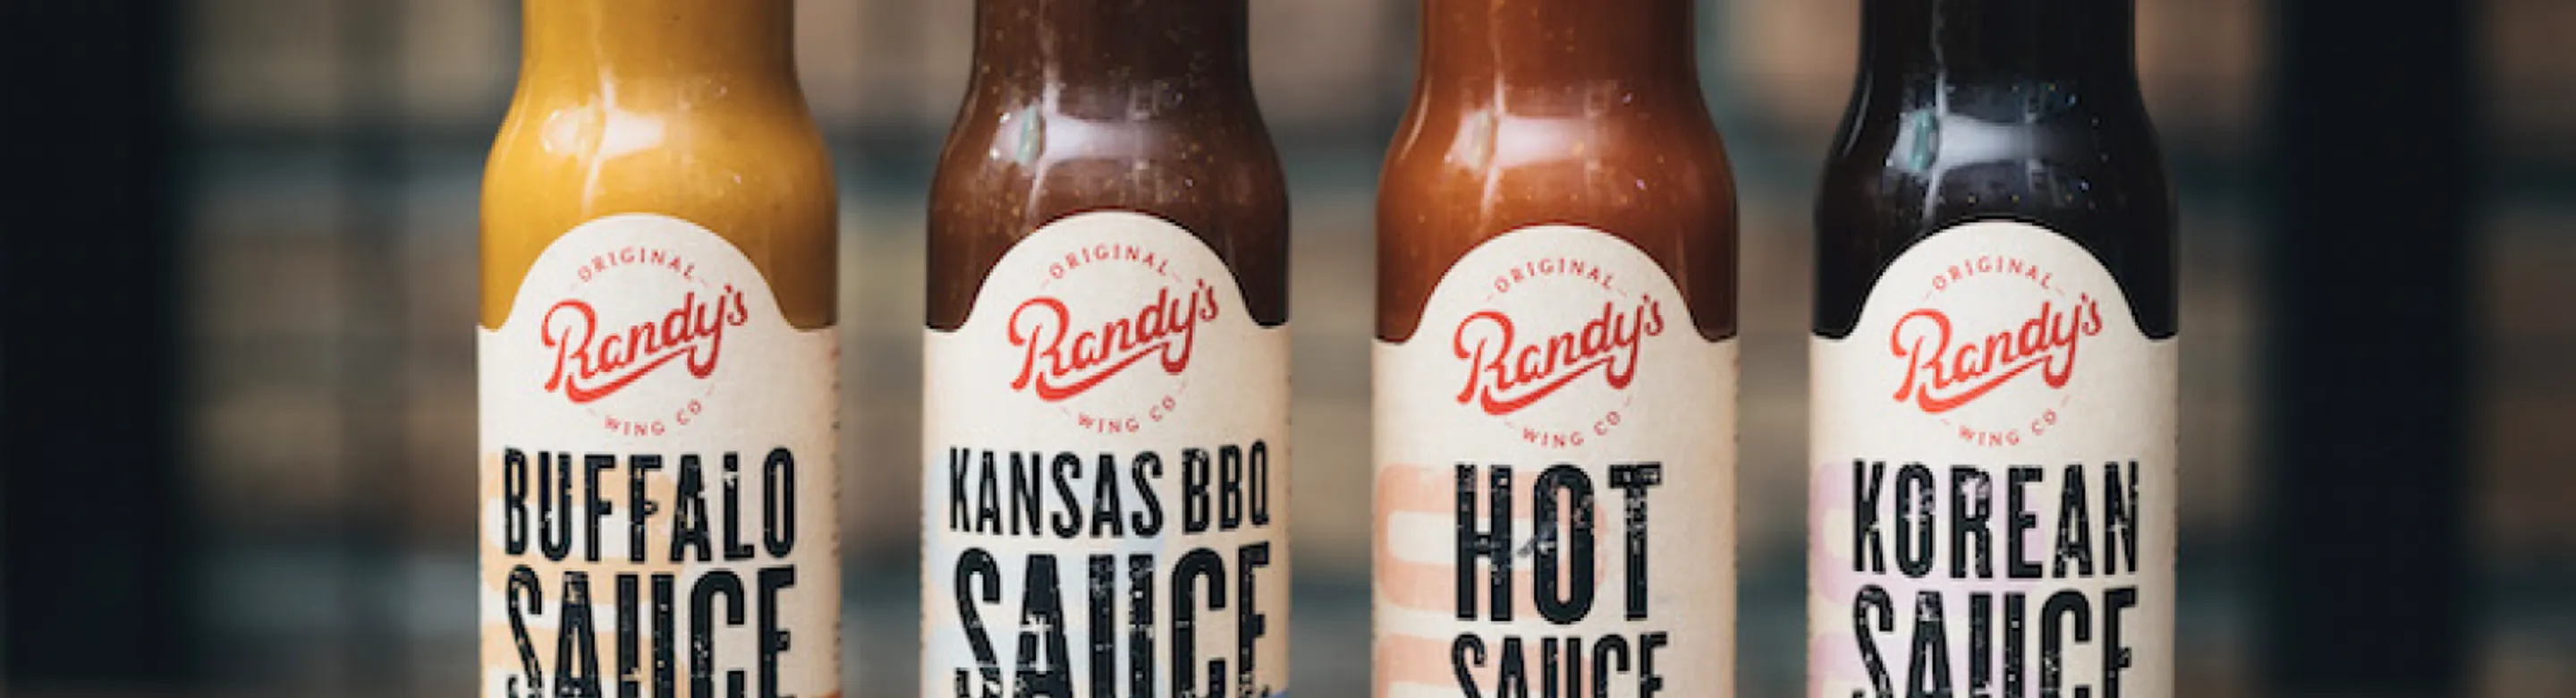 The Randys Sauce Co Ltd